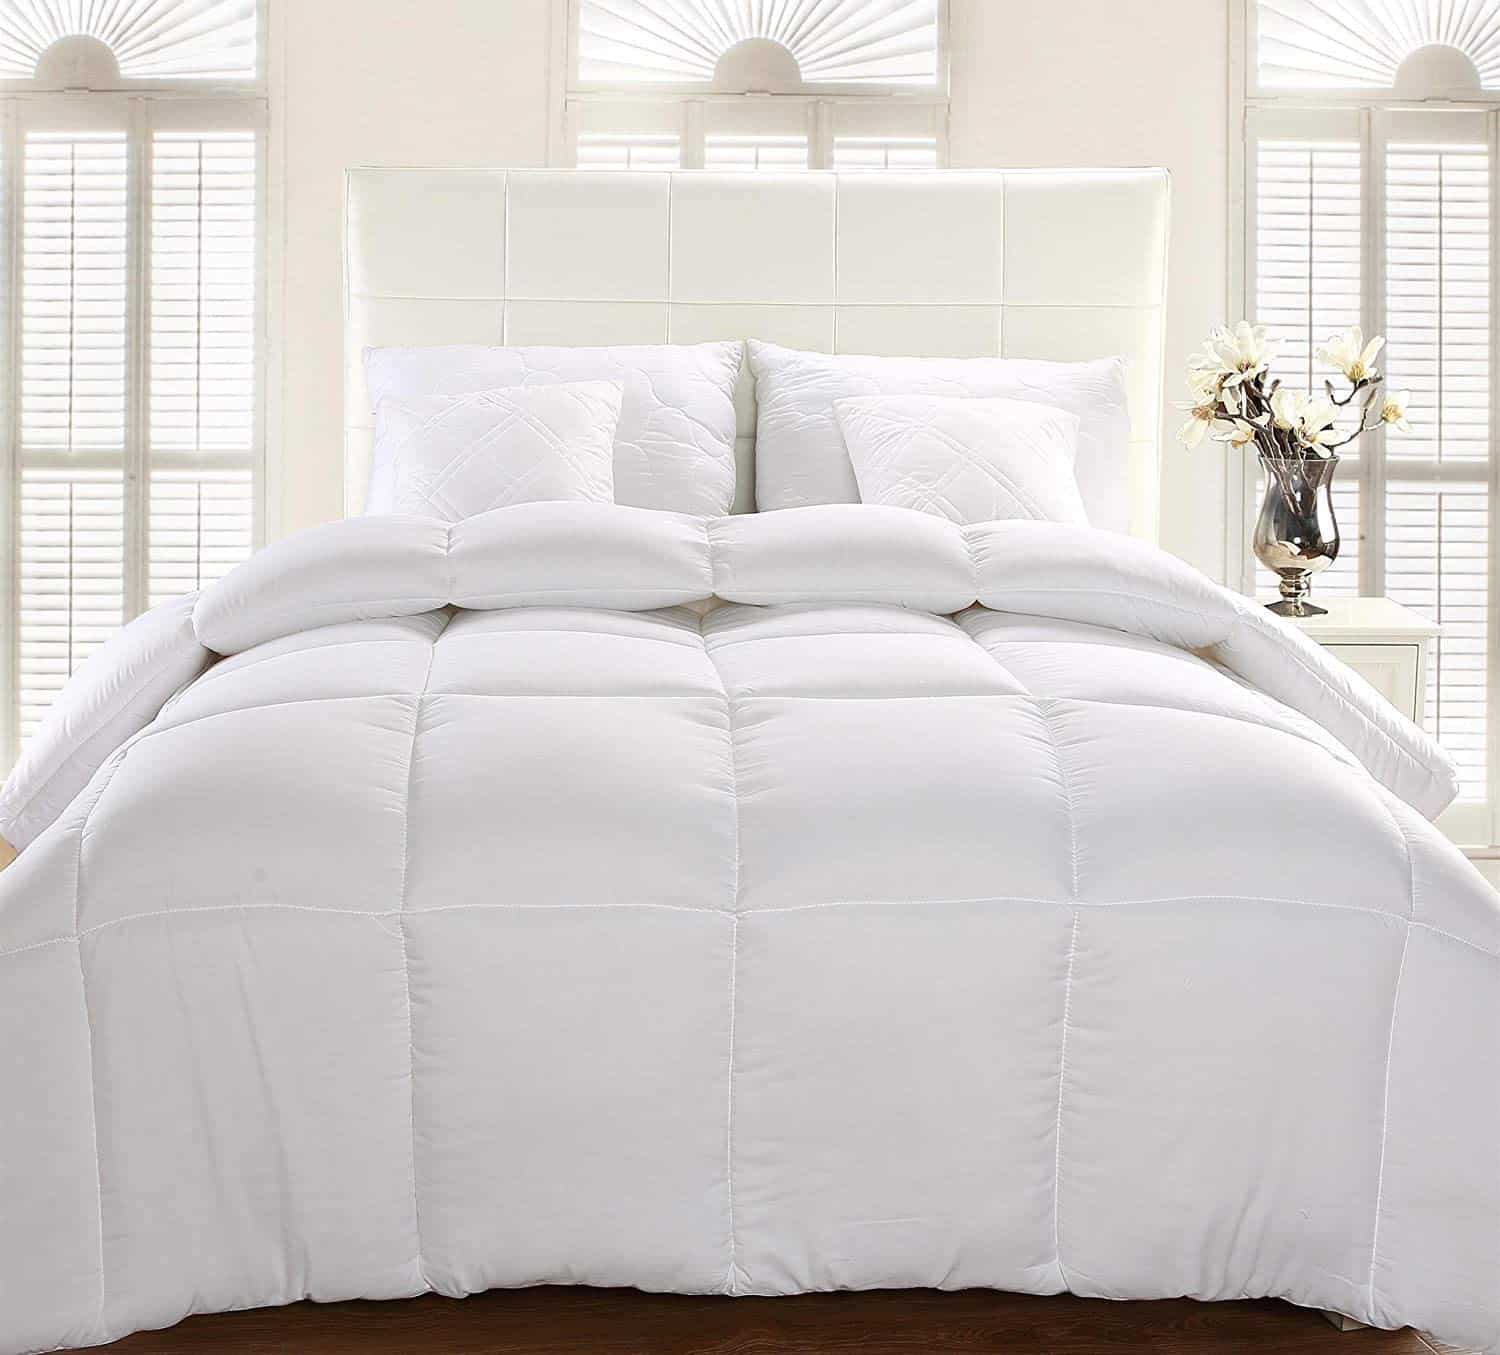 All-Season Down Alternative Quilted Comforter - Plush Microfiber Fill, Machine Washable